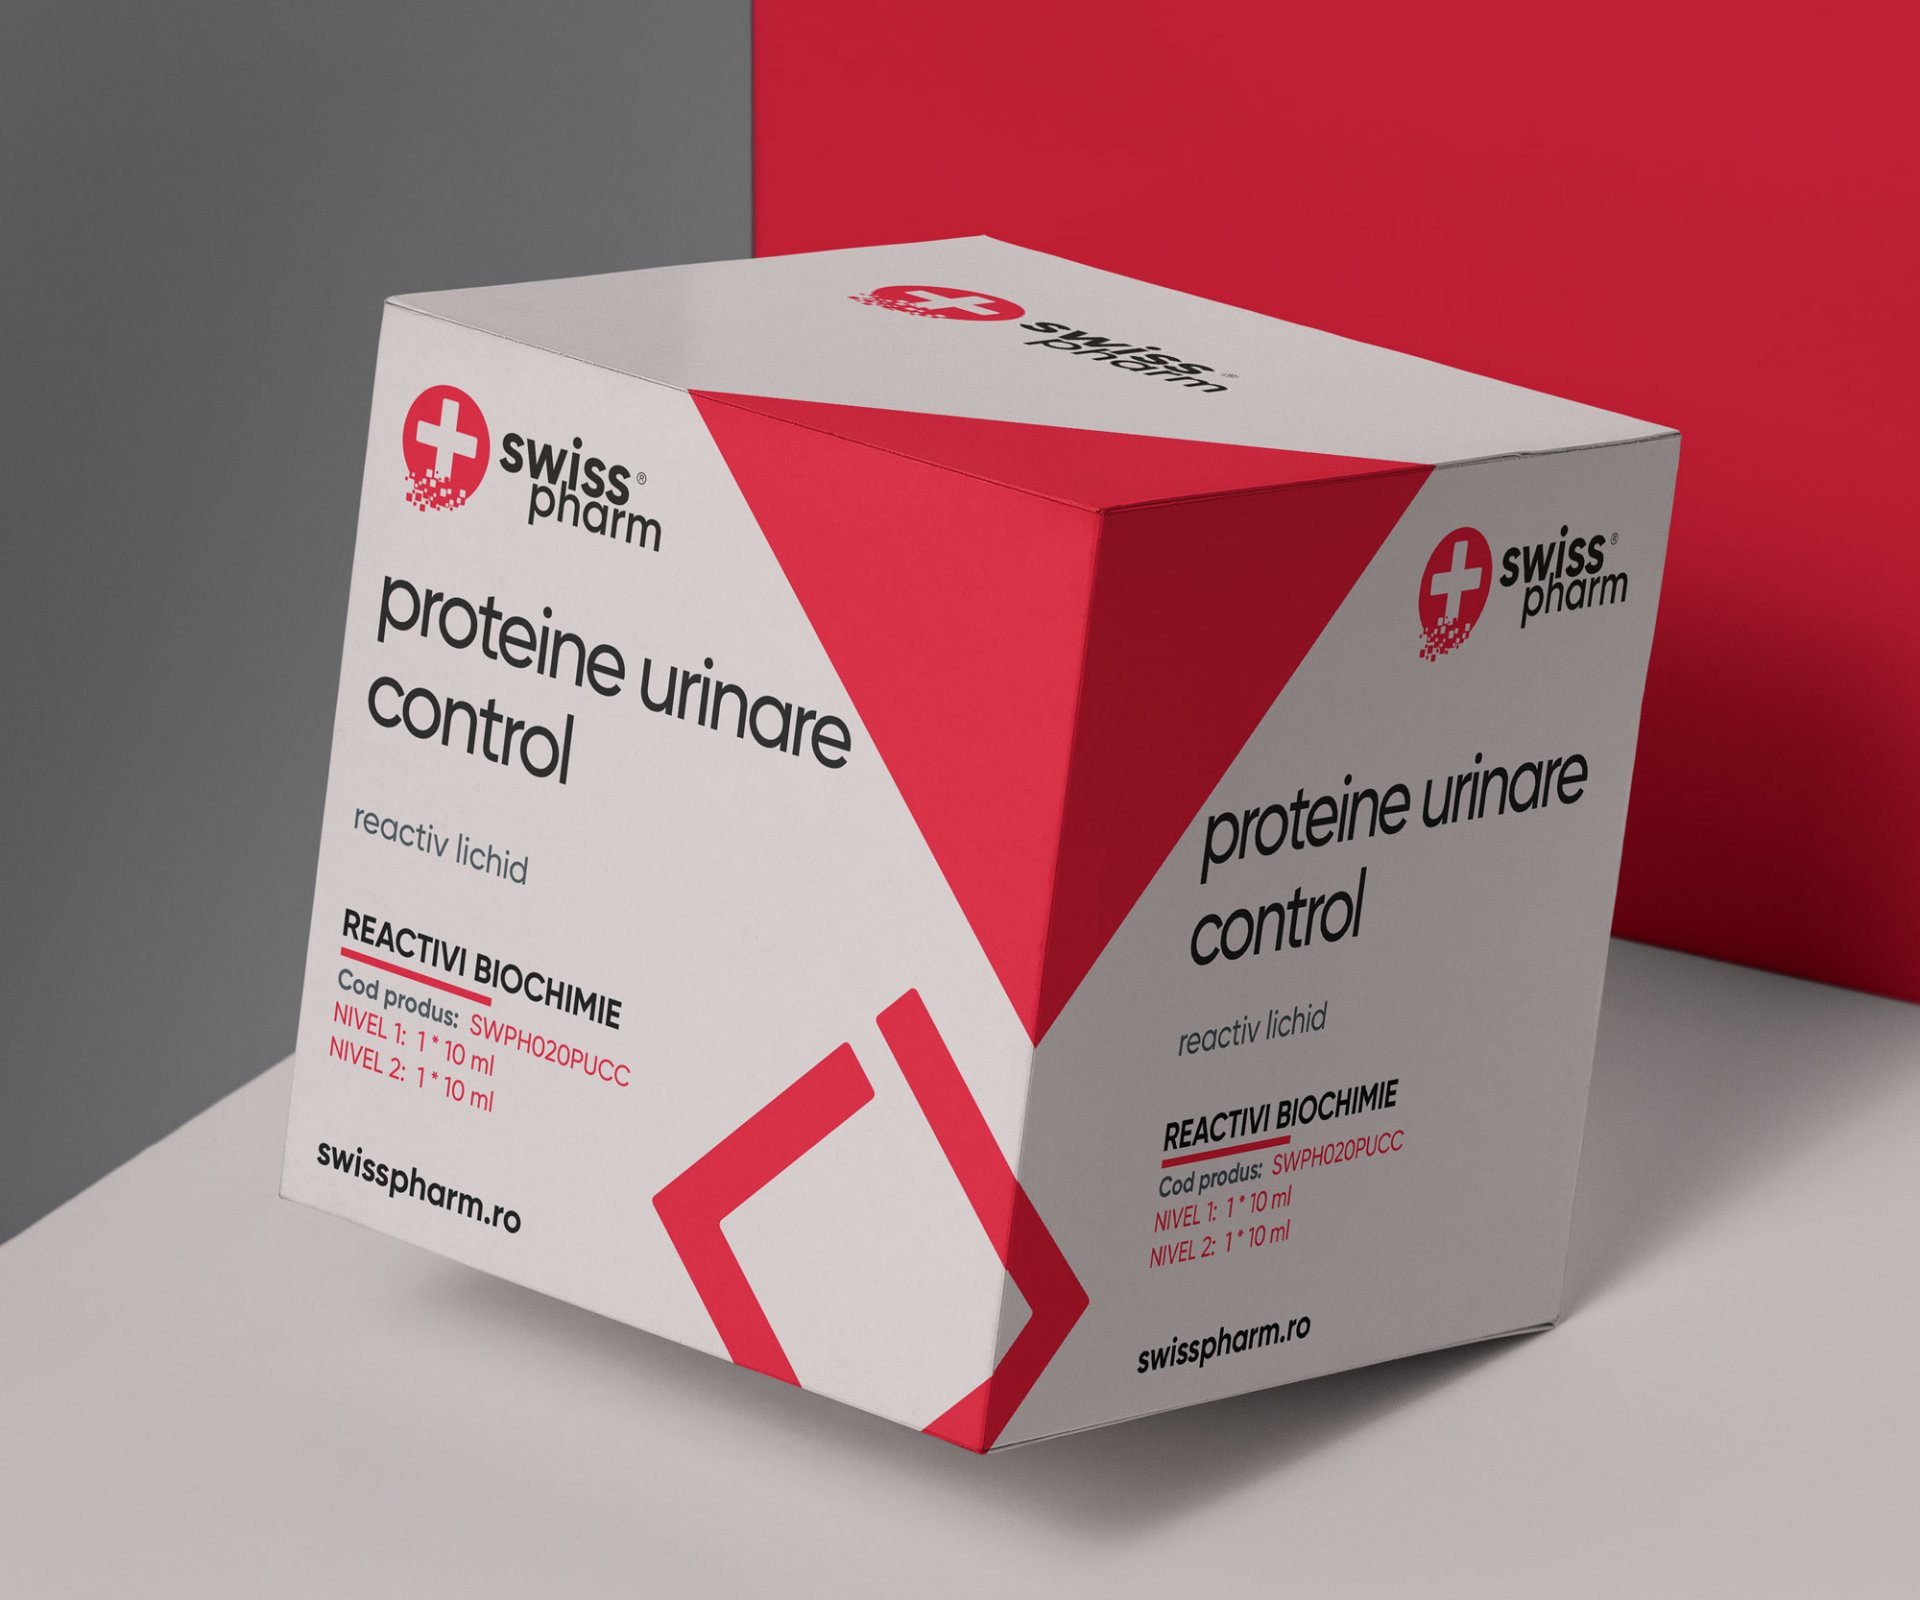 SwissPharm - Proteine urinare control